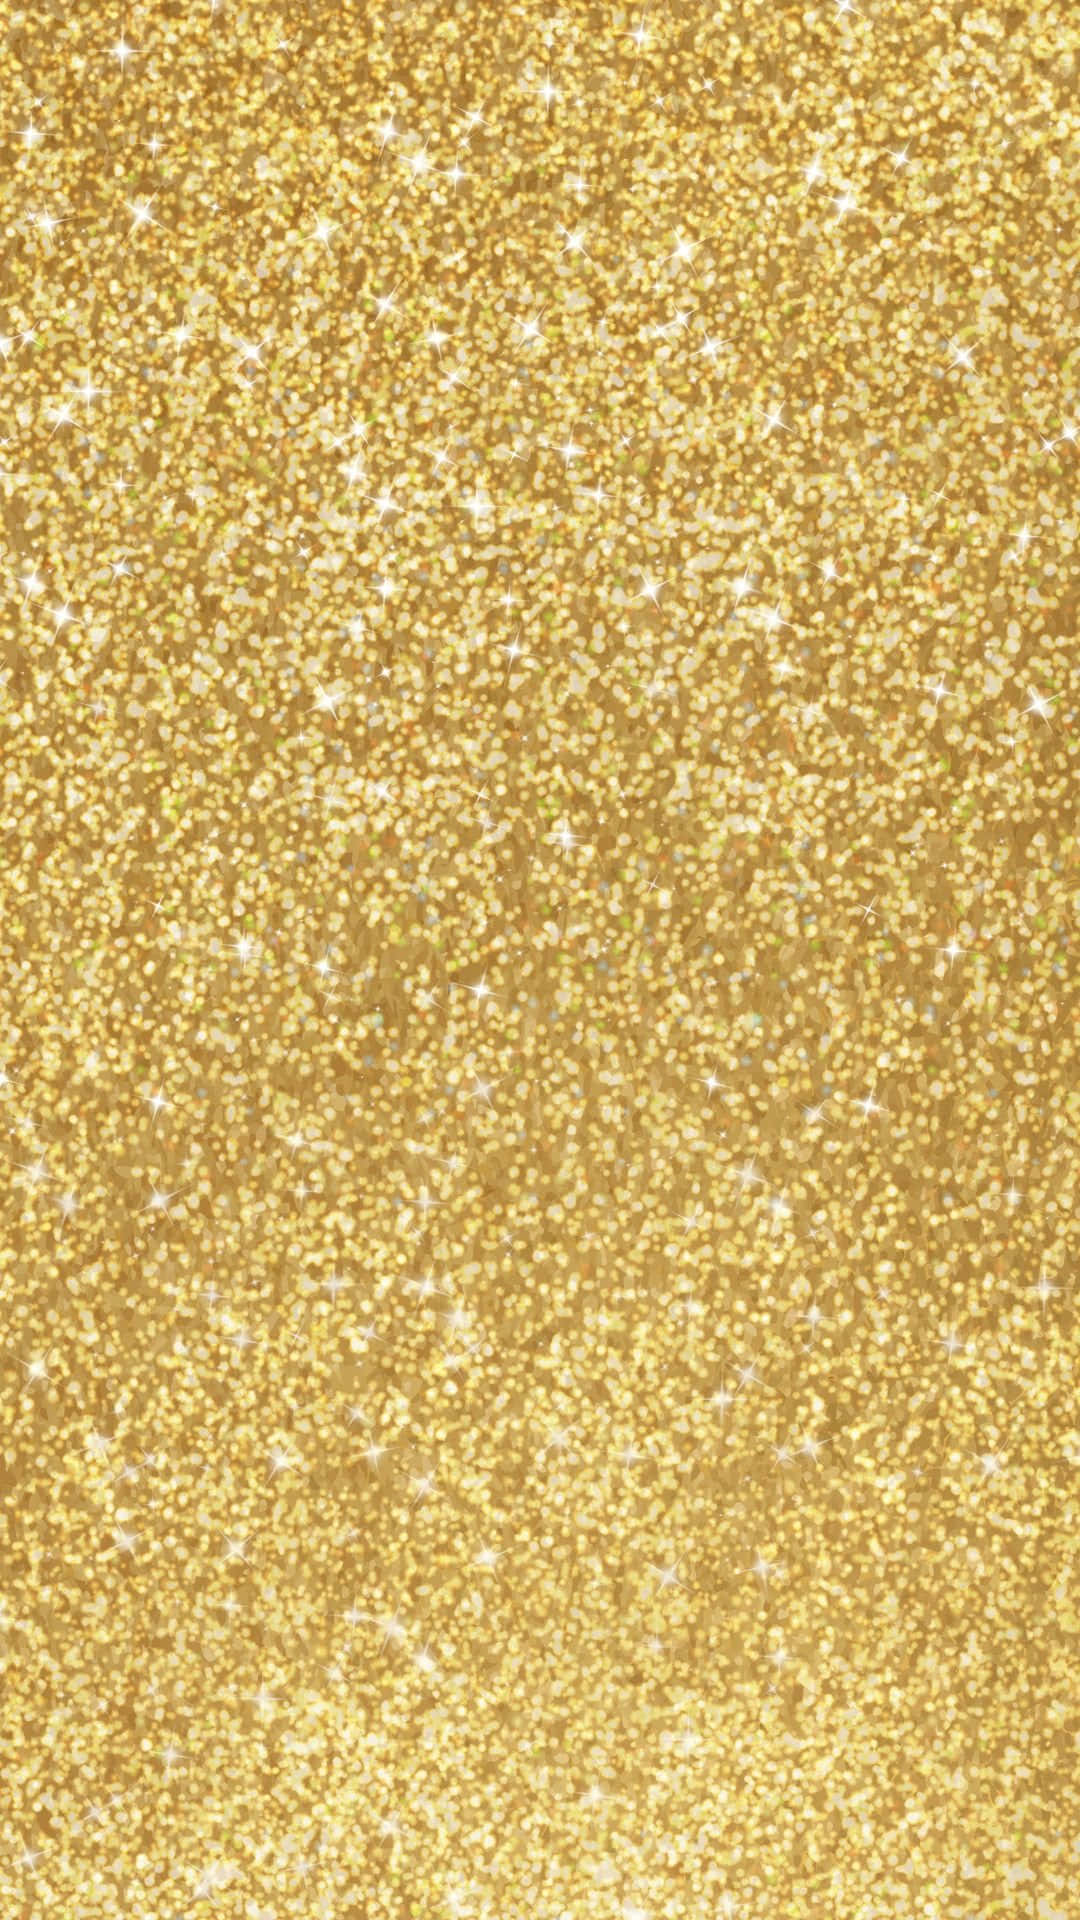 Glittering Gold Glitter Dust Picture